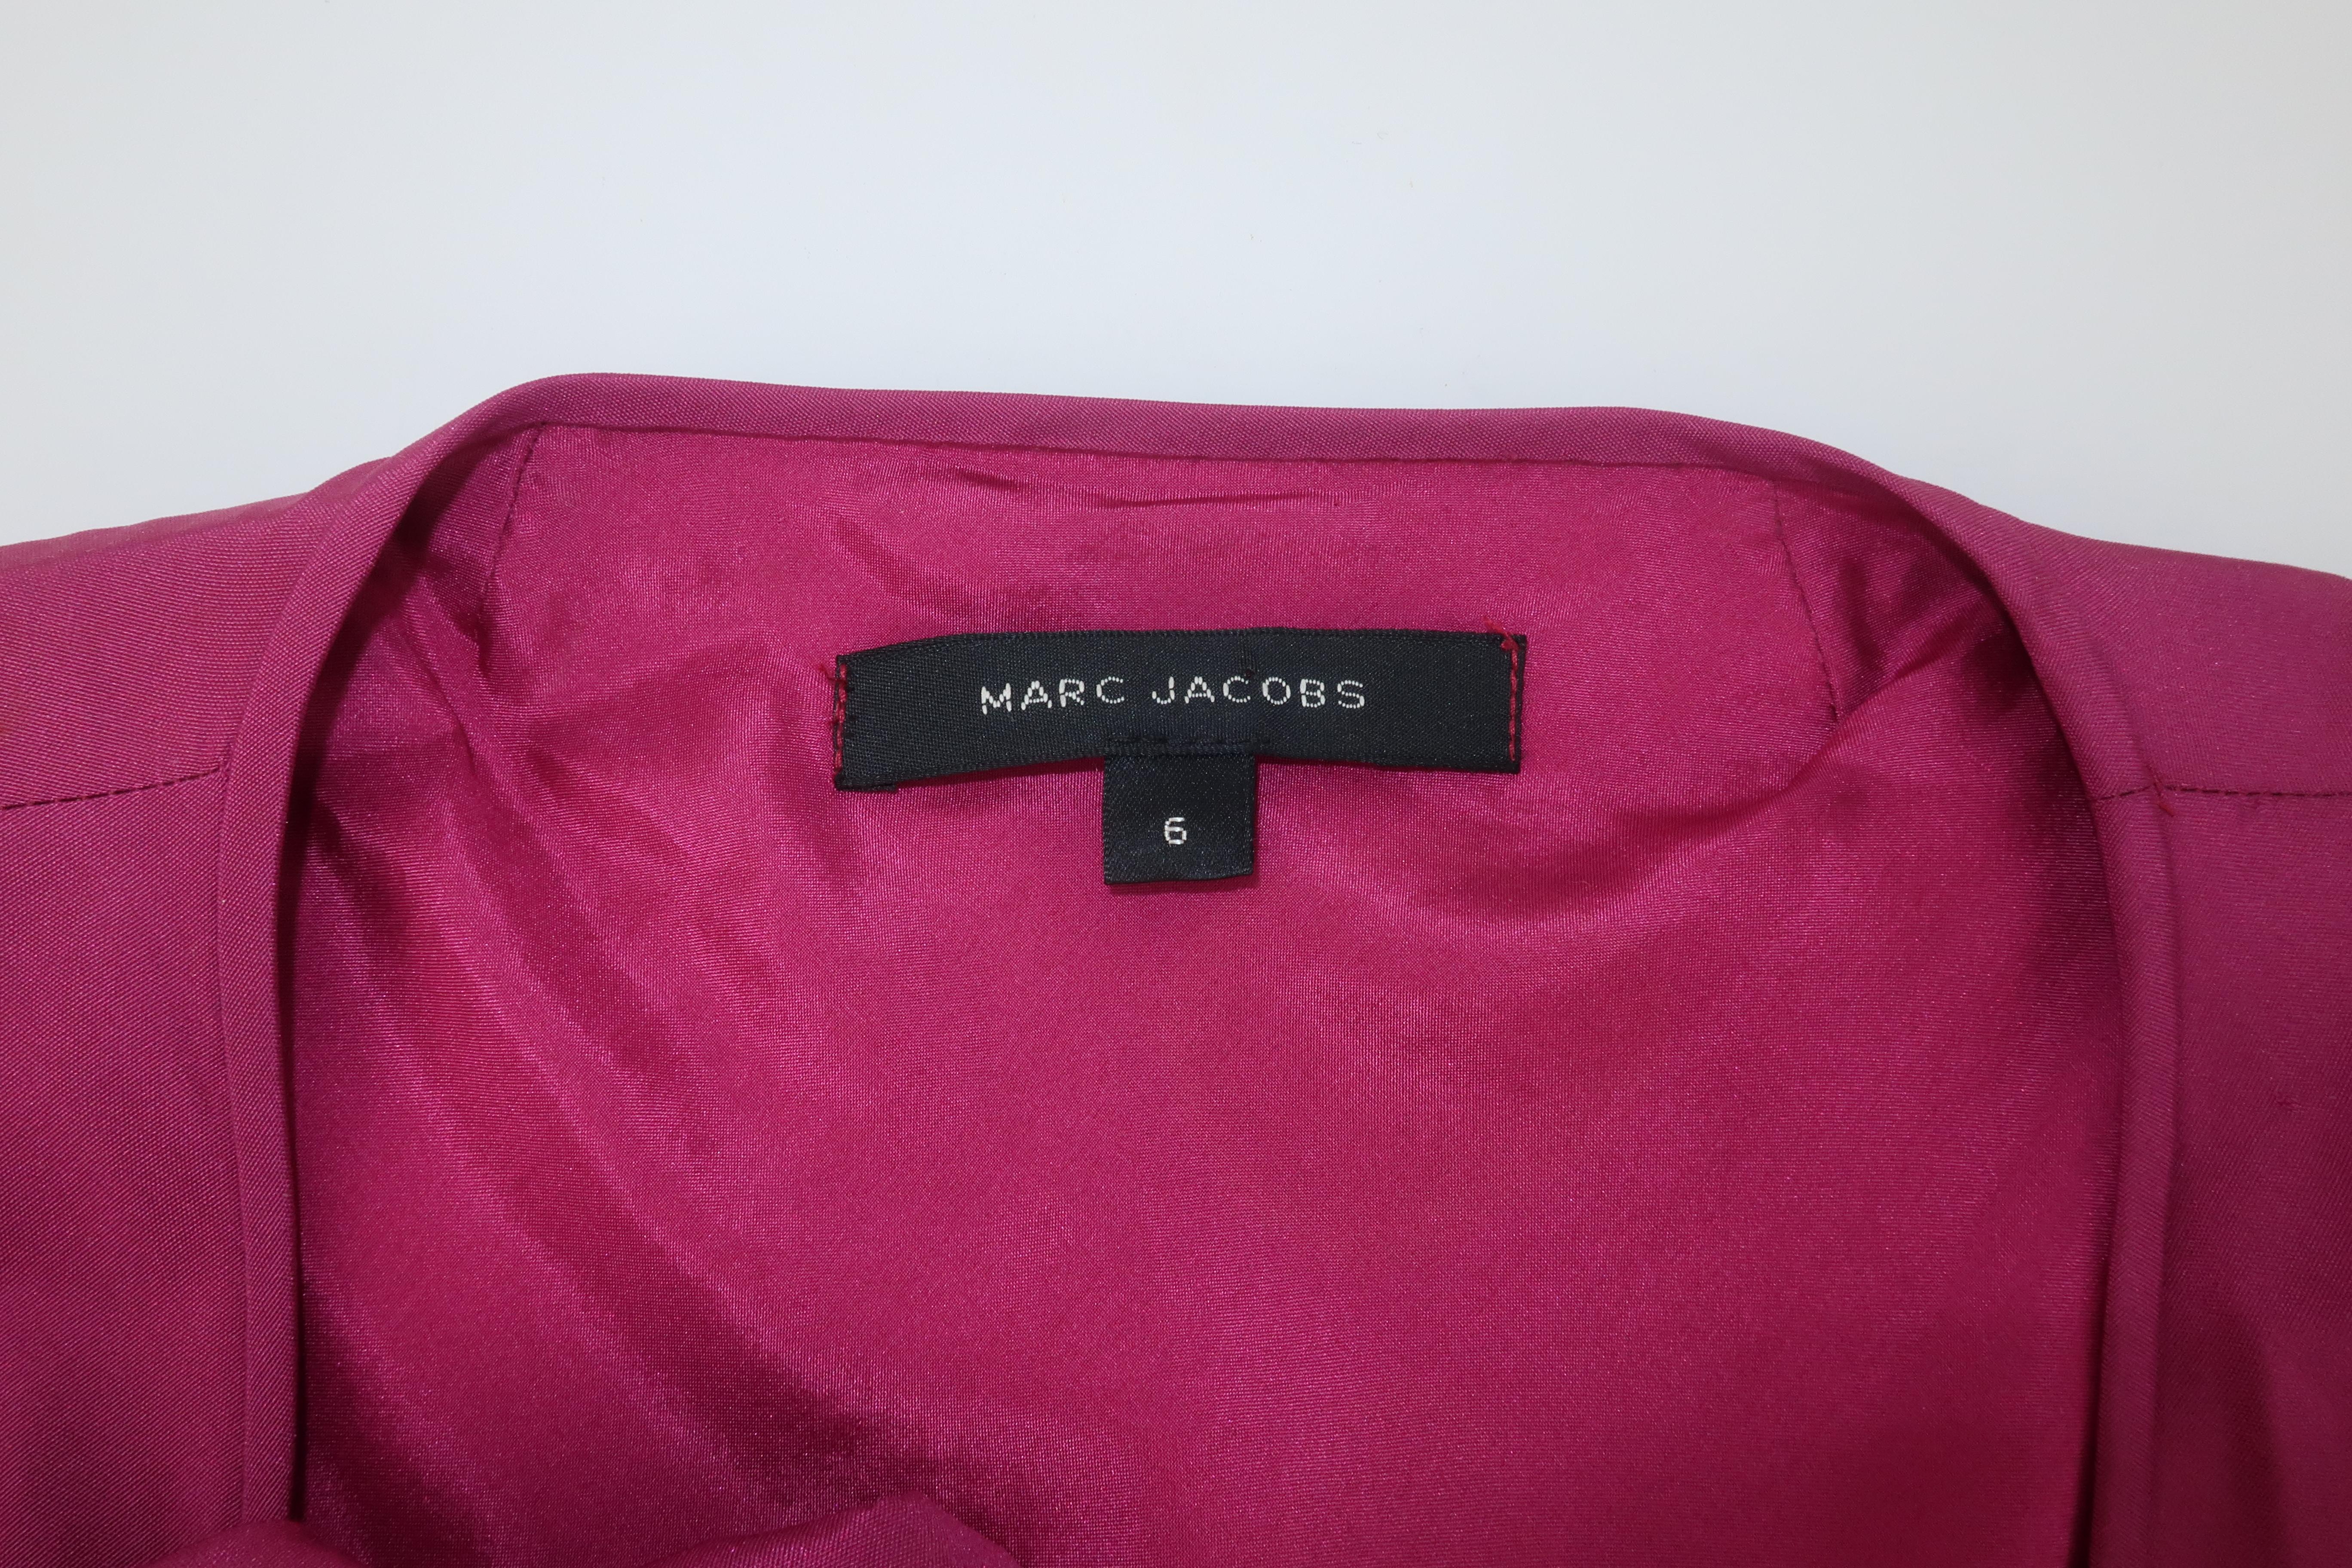 Marc Jacobs Dark Magenta Silk Taffeta Dress 4